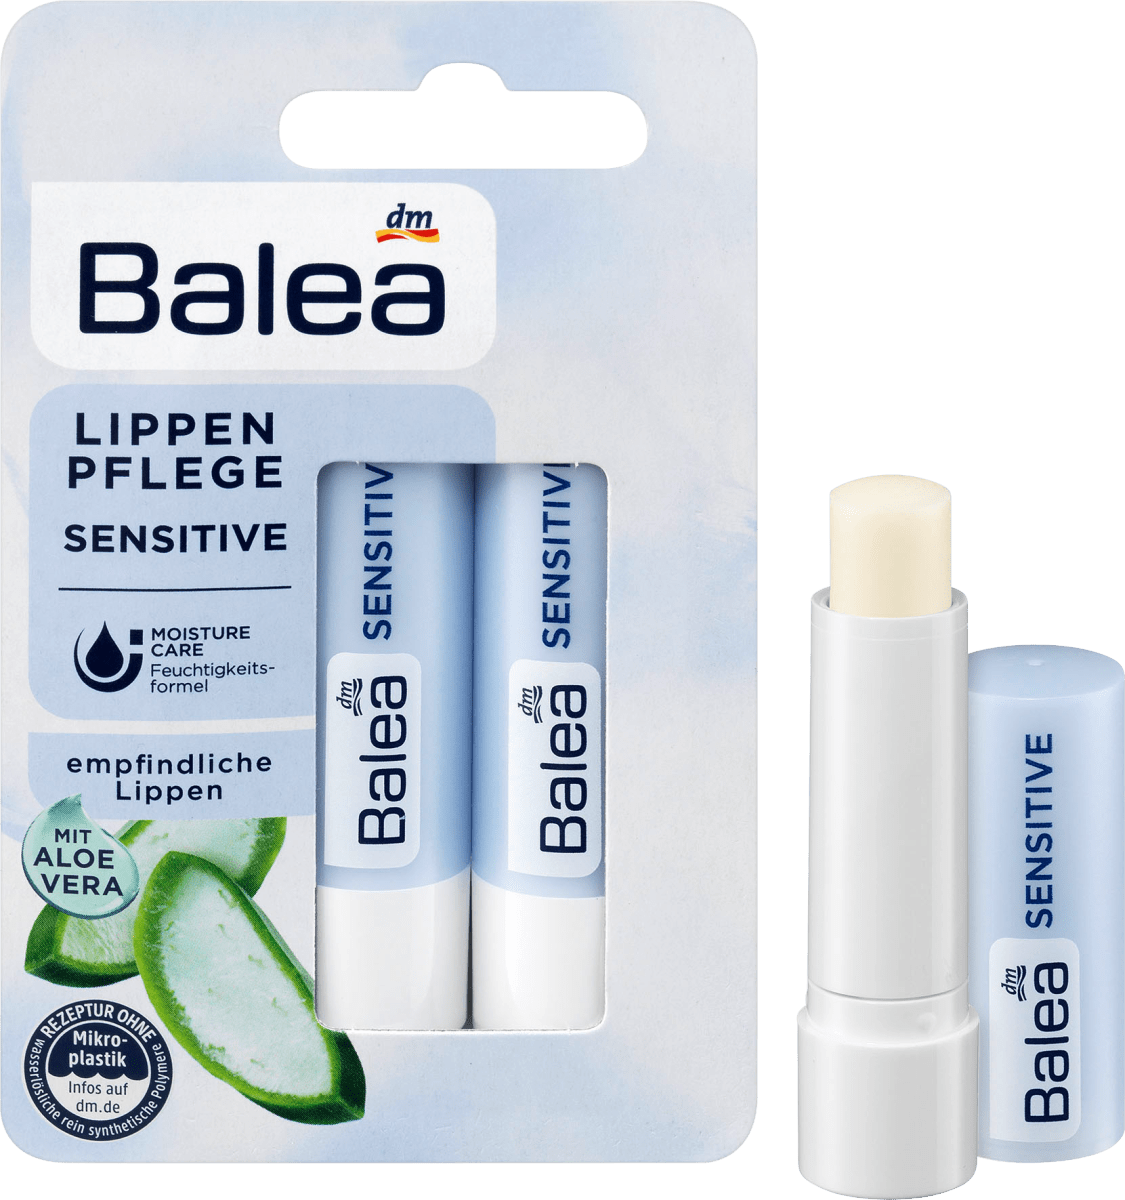 Balea Lippenpflege Sensitive Duopack 9 6 G Dauerhaft Gunstig Online Kaufen Dm De